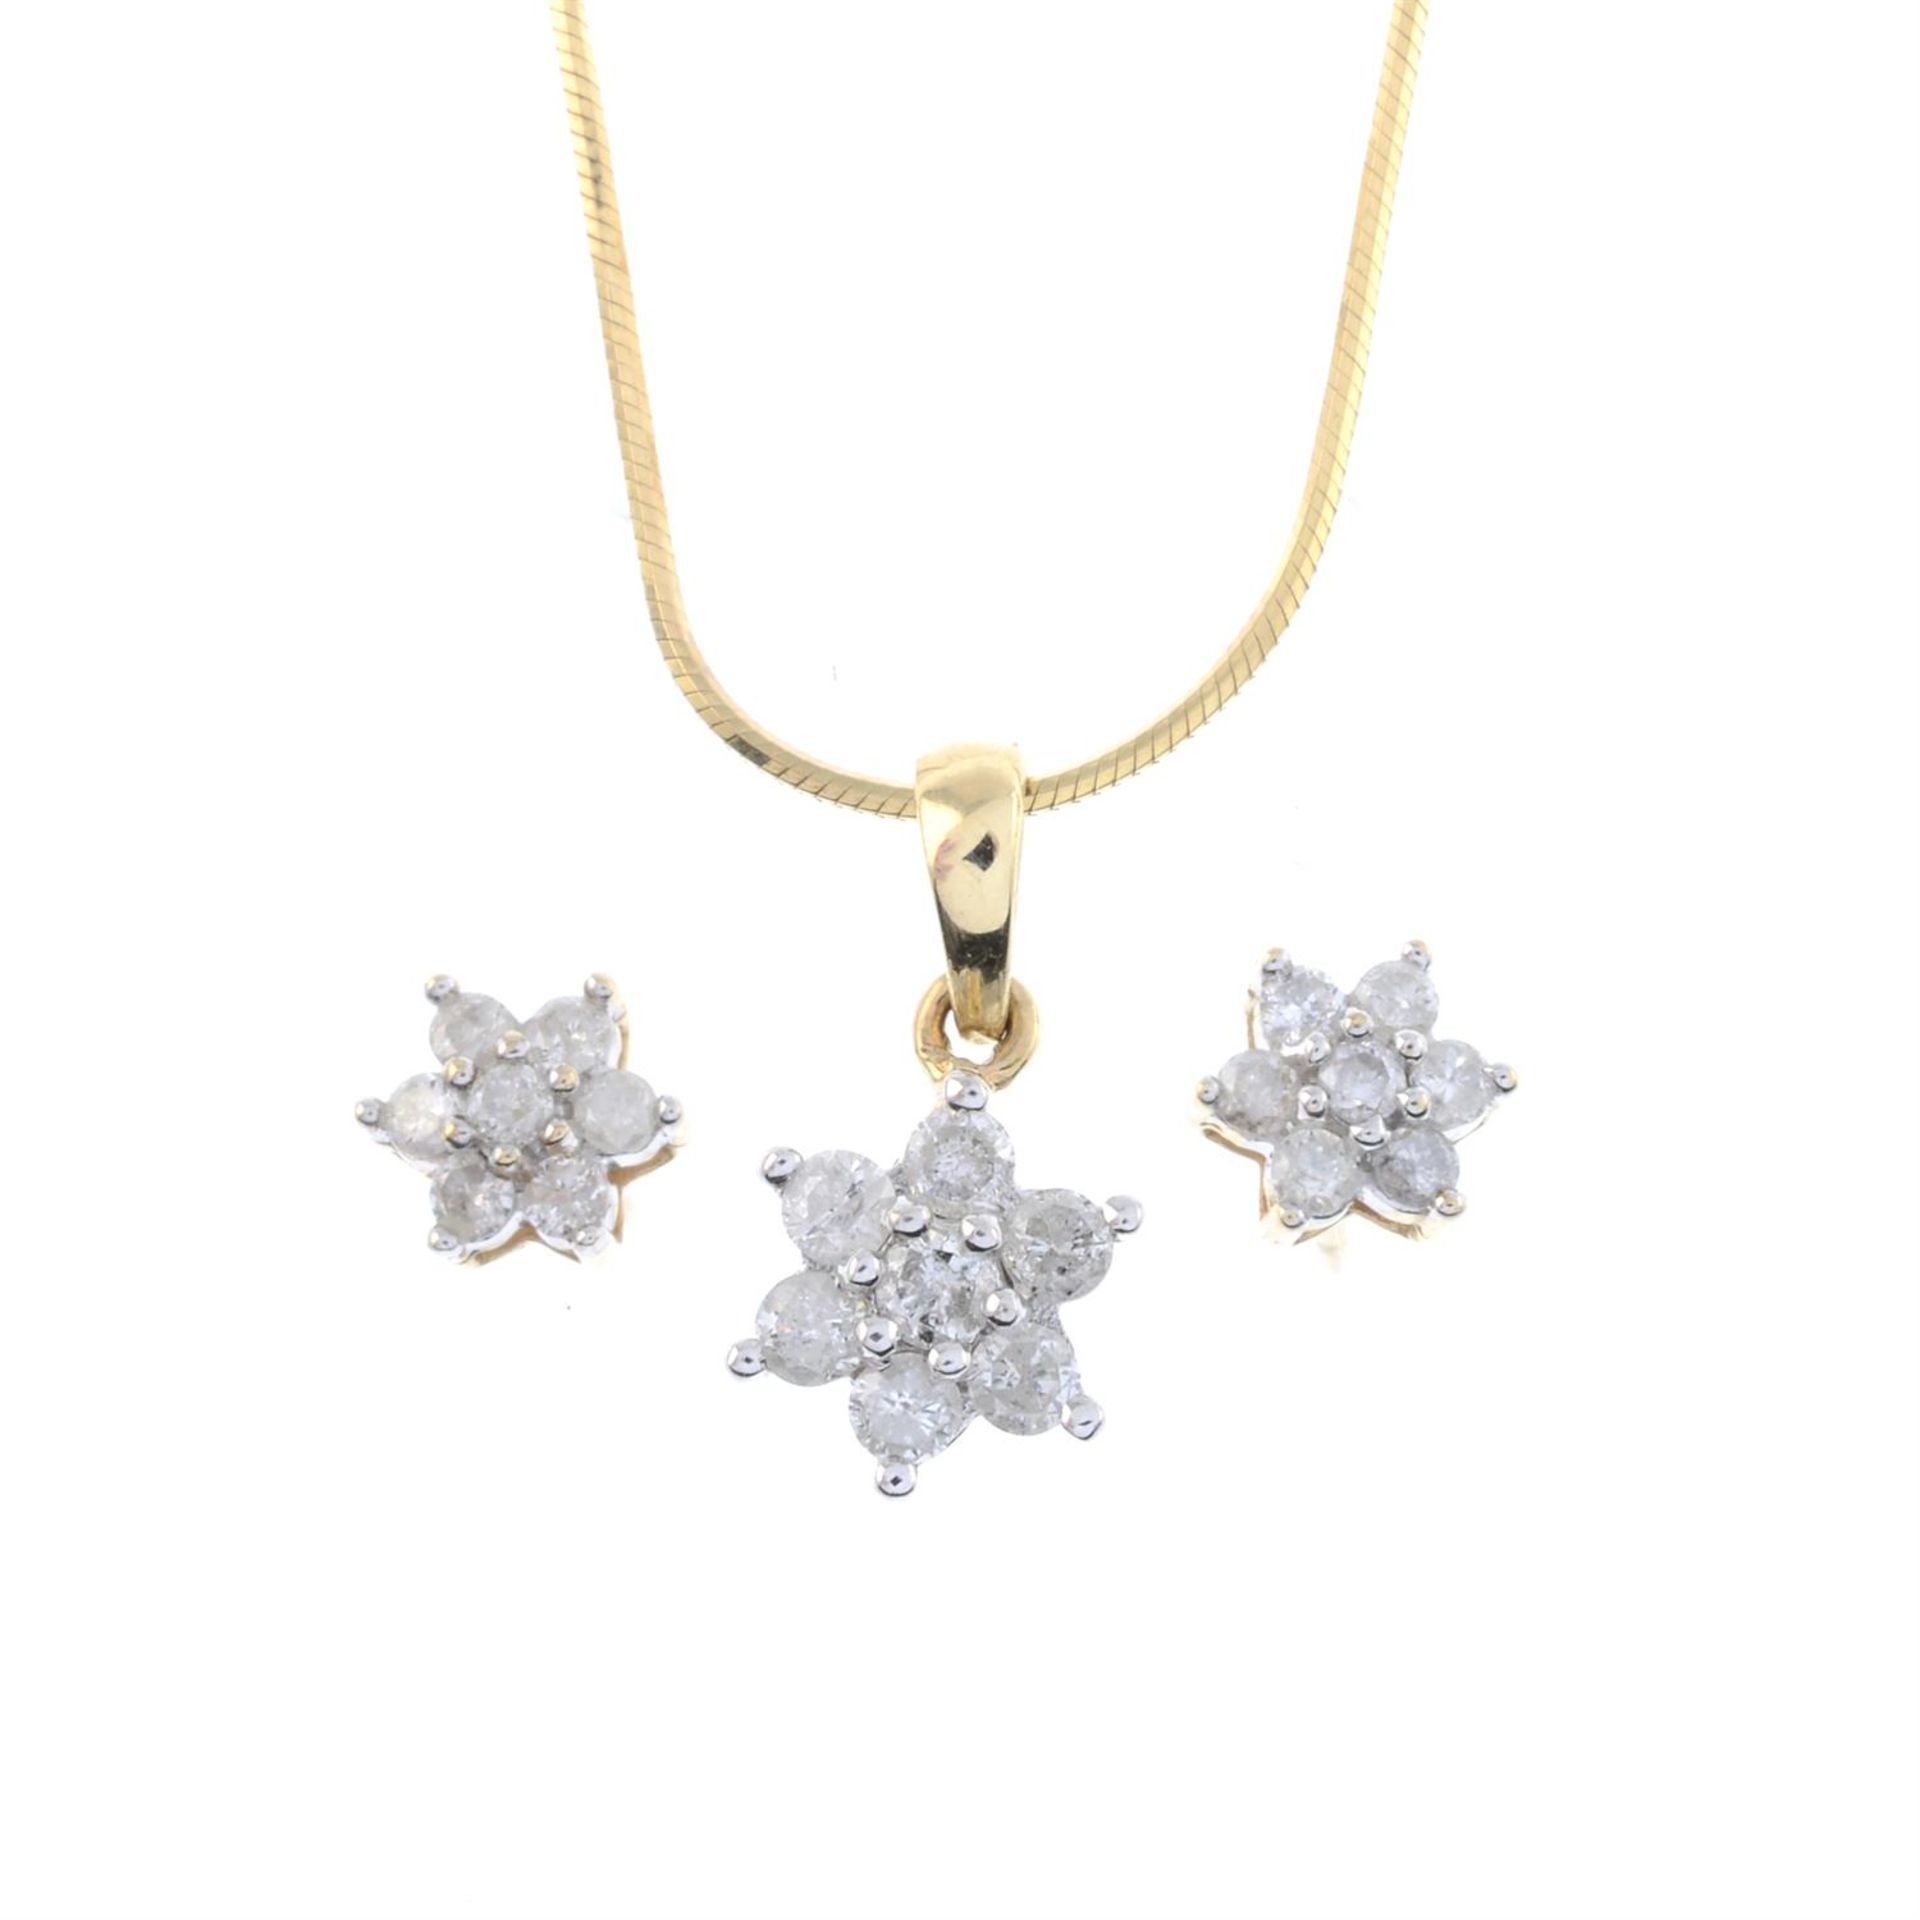 Diamond earrings and pendant set